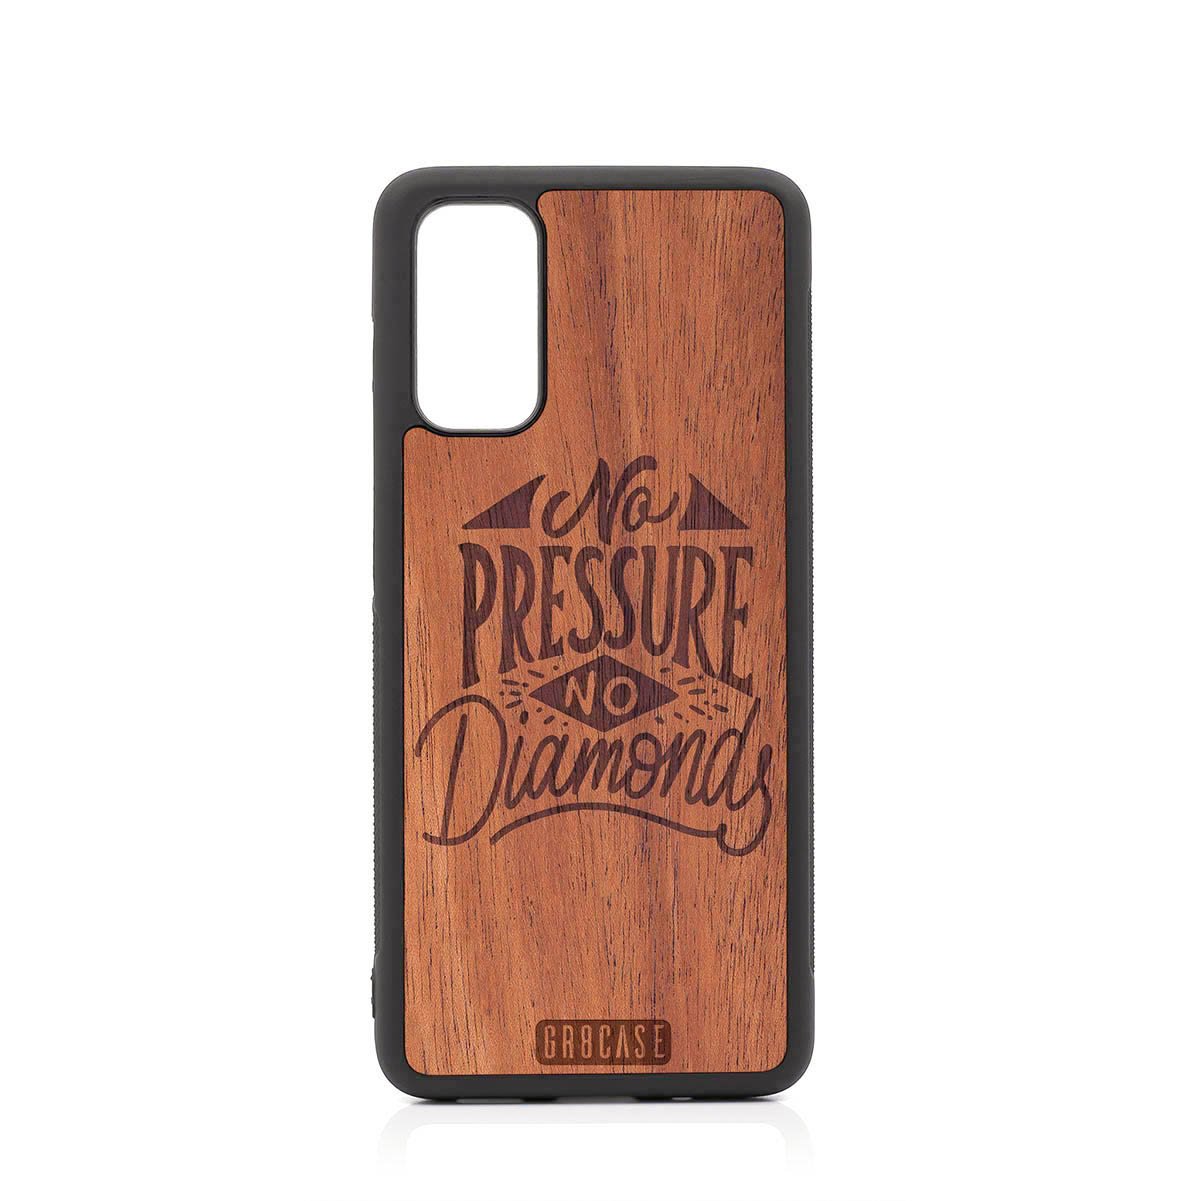 No Pressure No Diamonds Design Wood Case For Samsung Galaxy S20 FE 5G